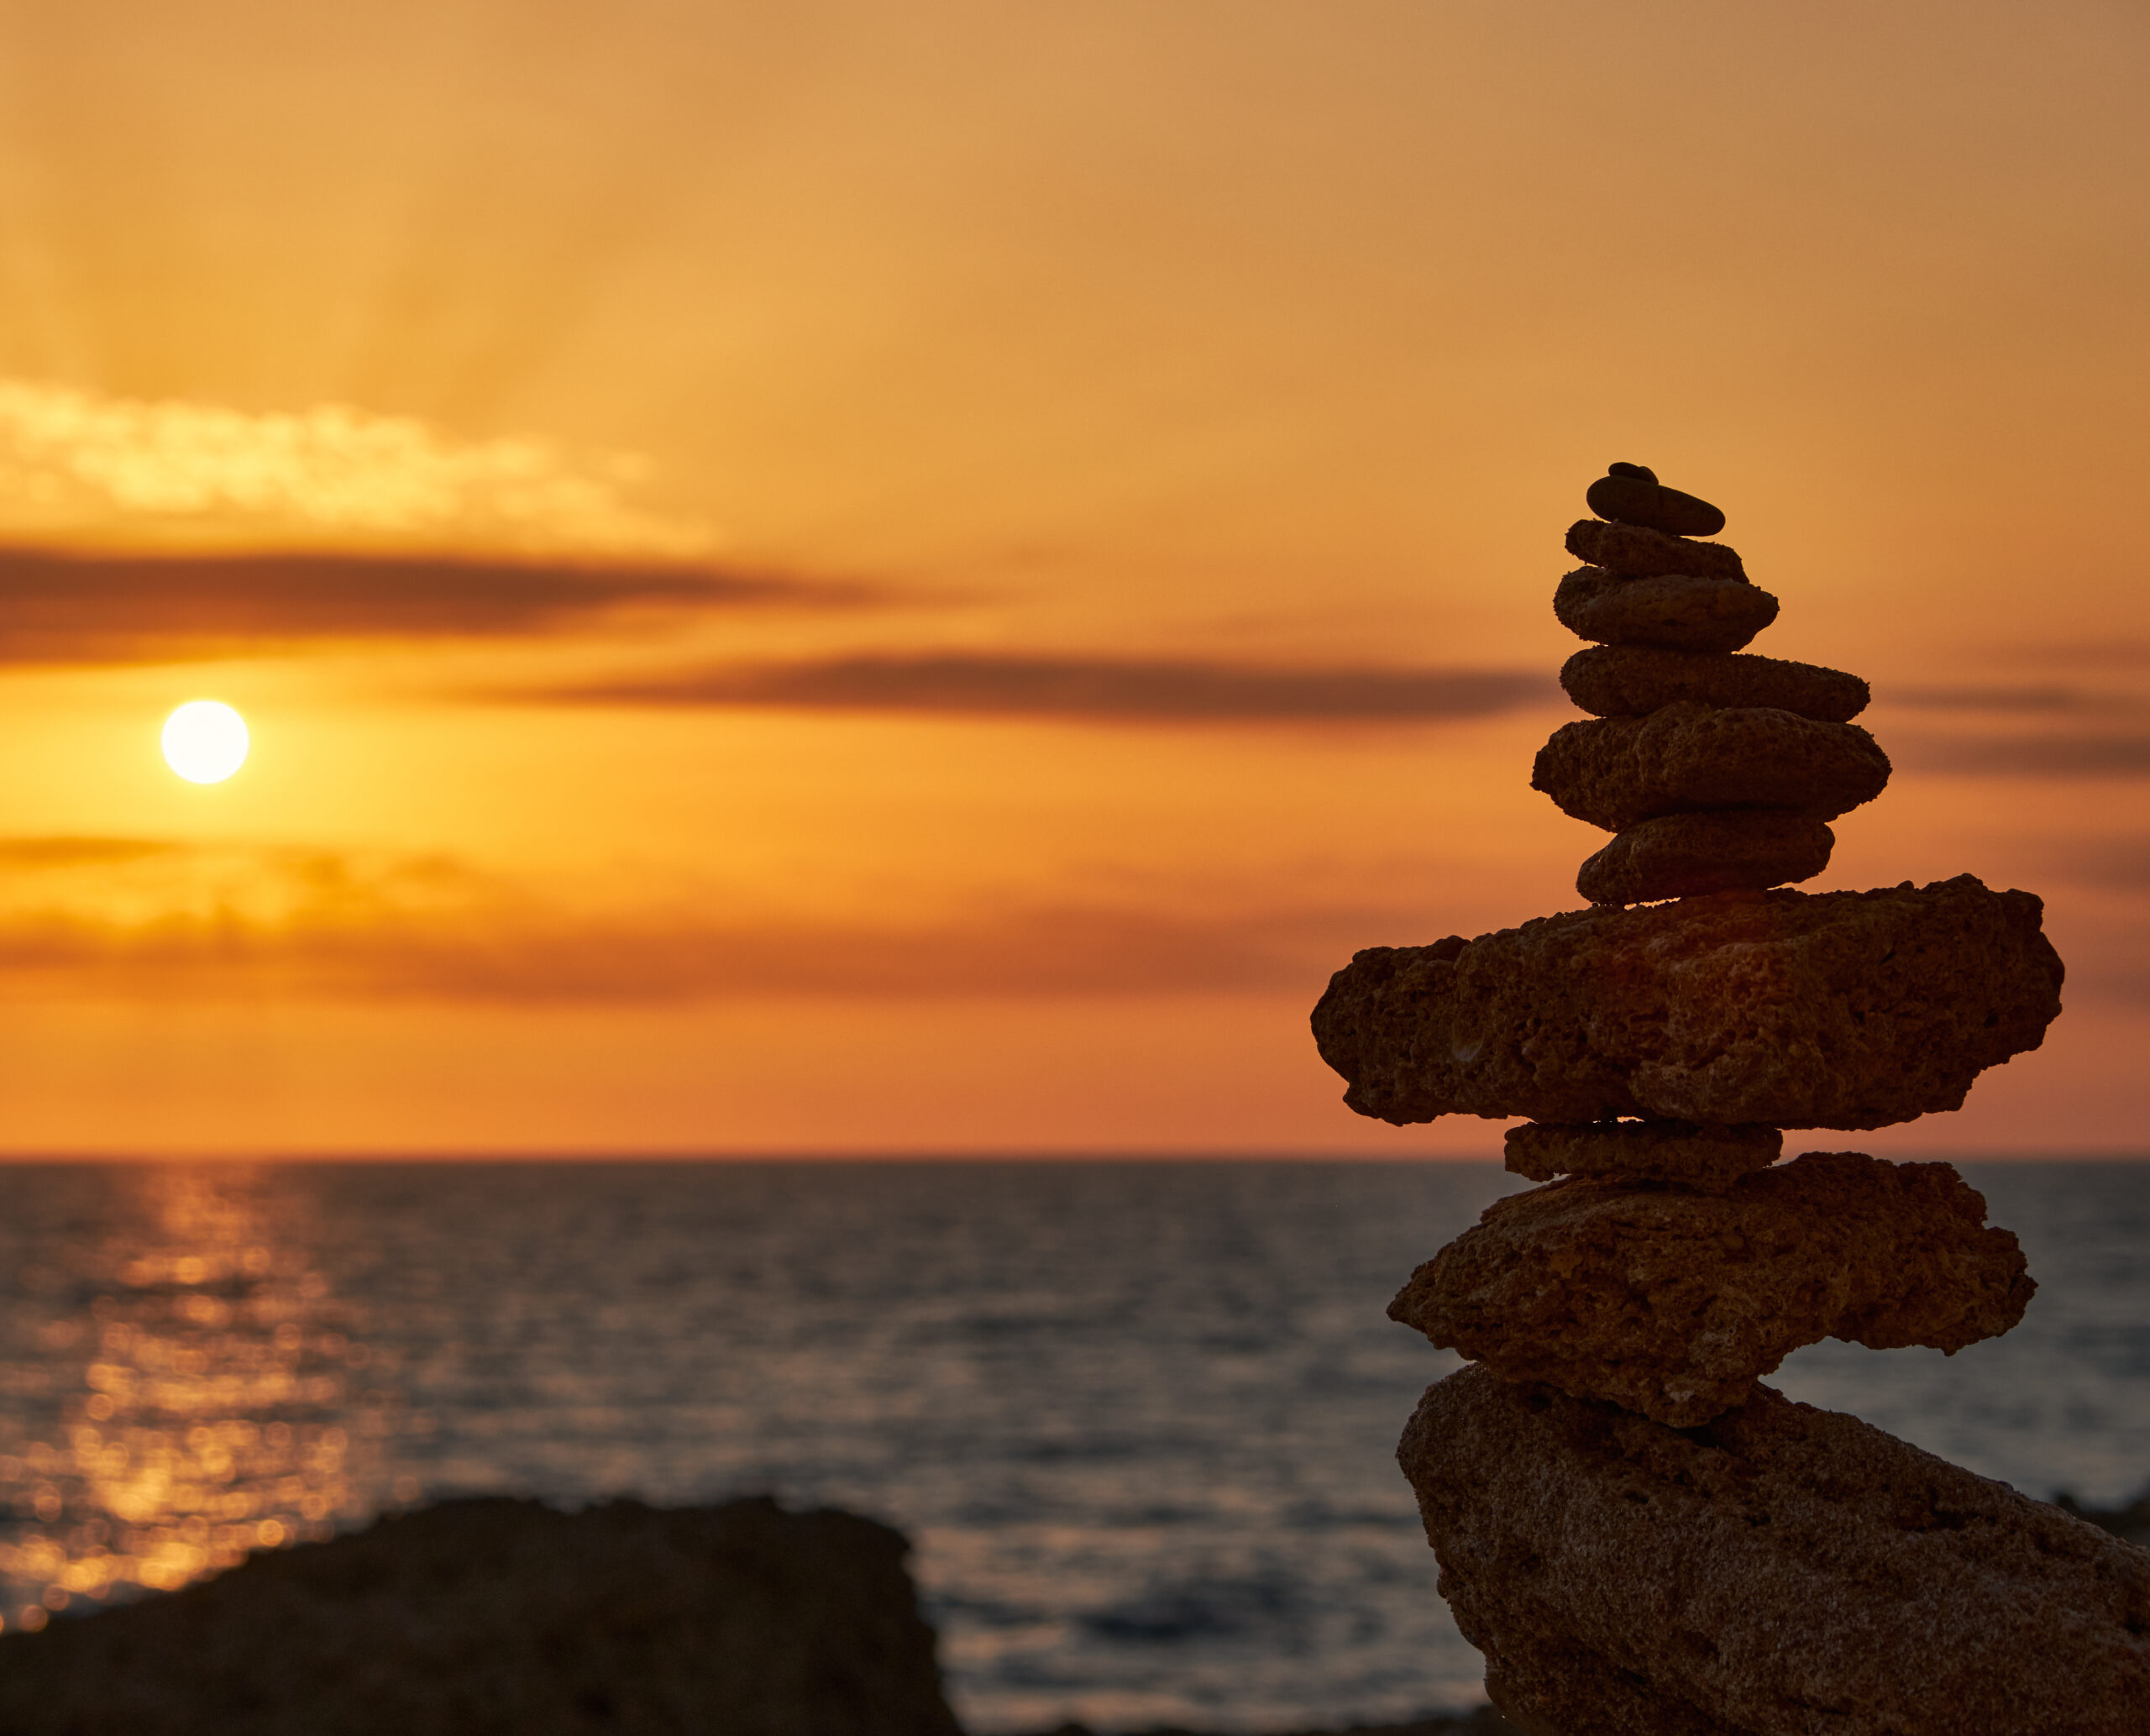 Stack Of Rocks Against A Beautiful Sunset At Roche Cove In Conil De La Frontera, Spain